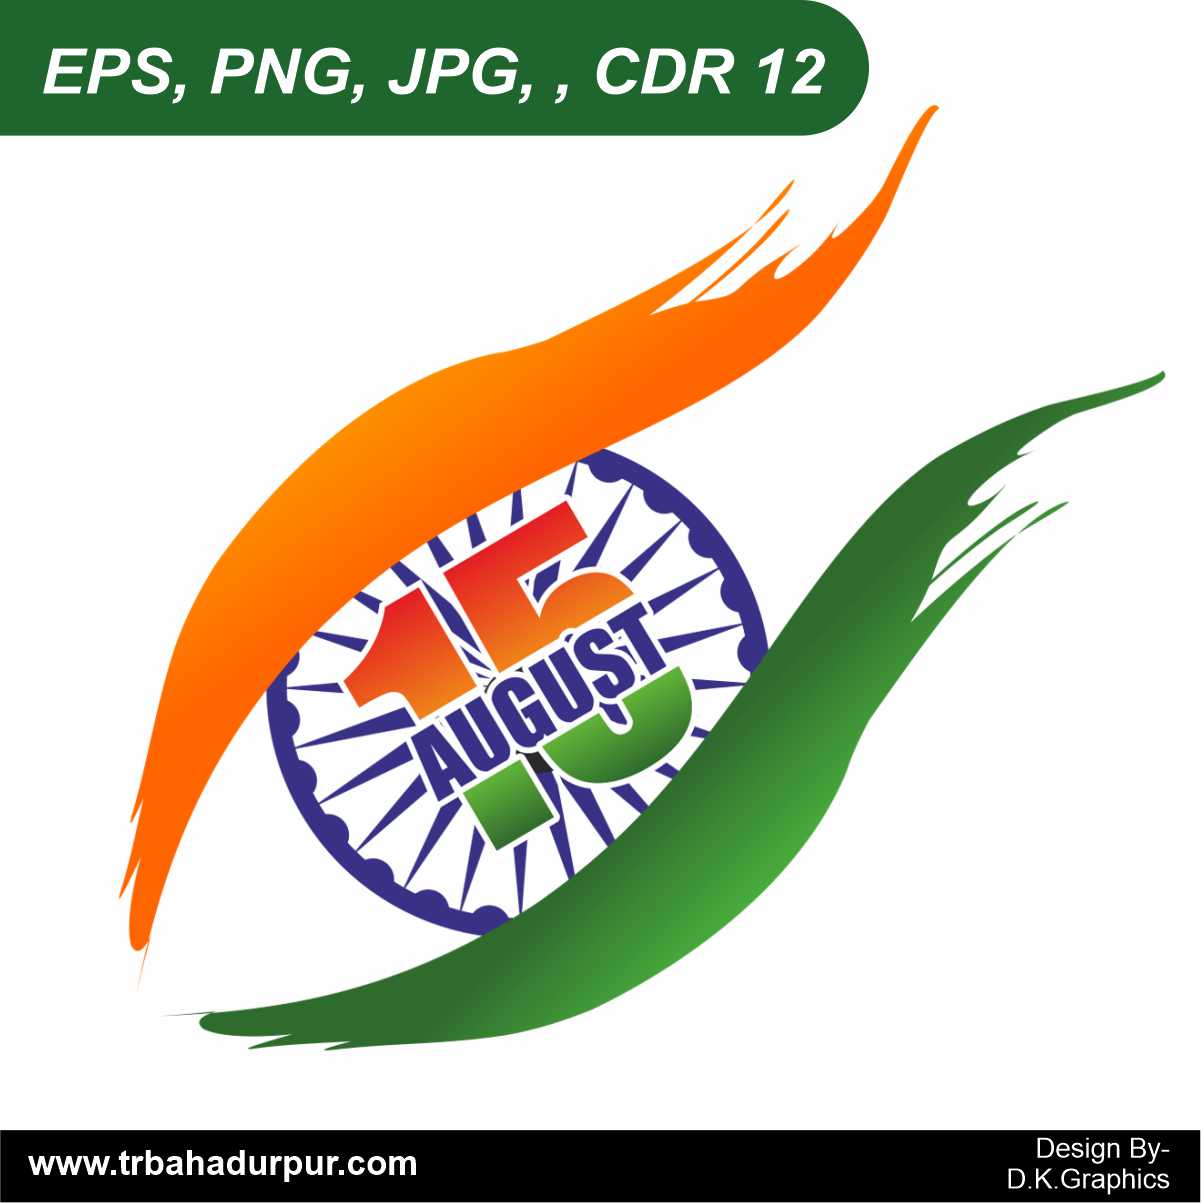 Navratri logo png images for dp | Happy navratri images, Navratri images,  Banner background images